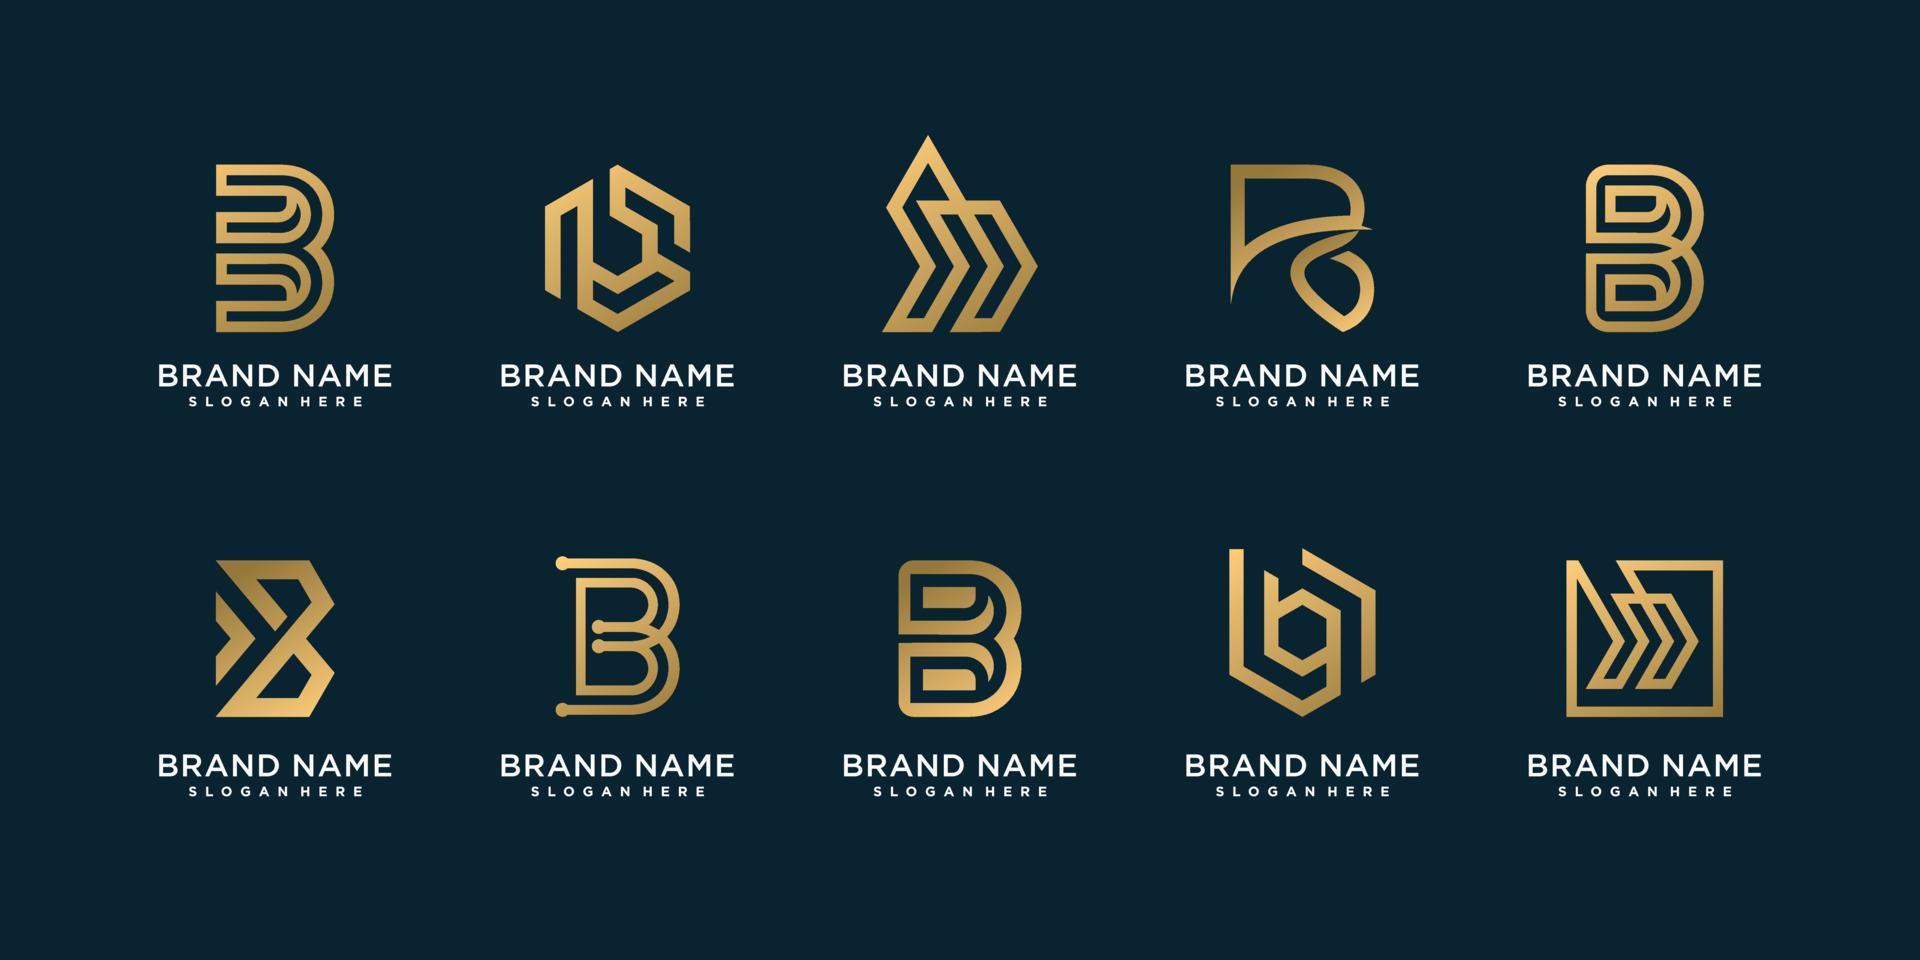 conjunto de colección de logotipos de letra b con vector premium de concepto creativo moderno